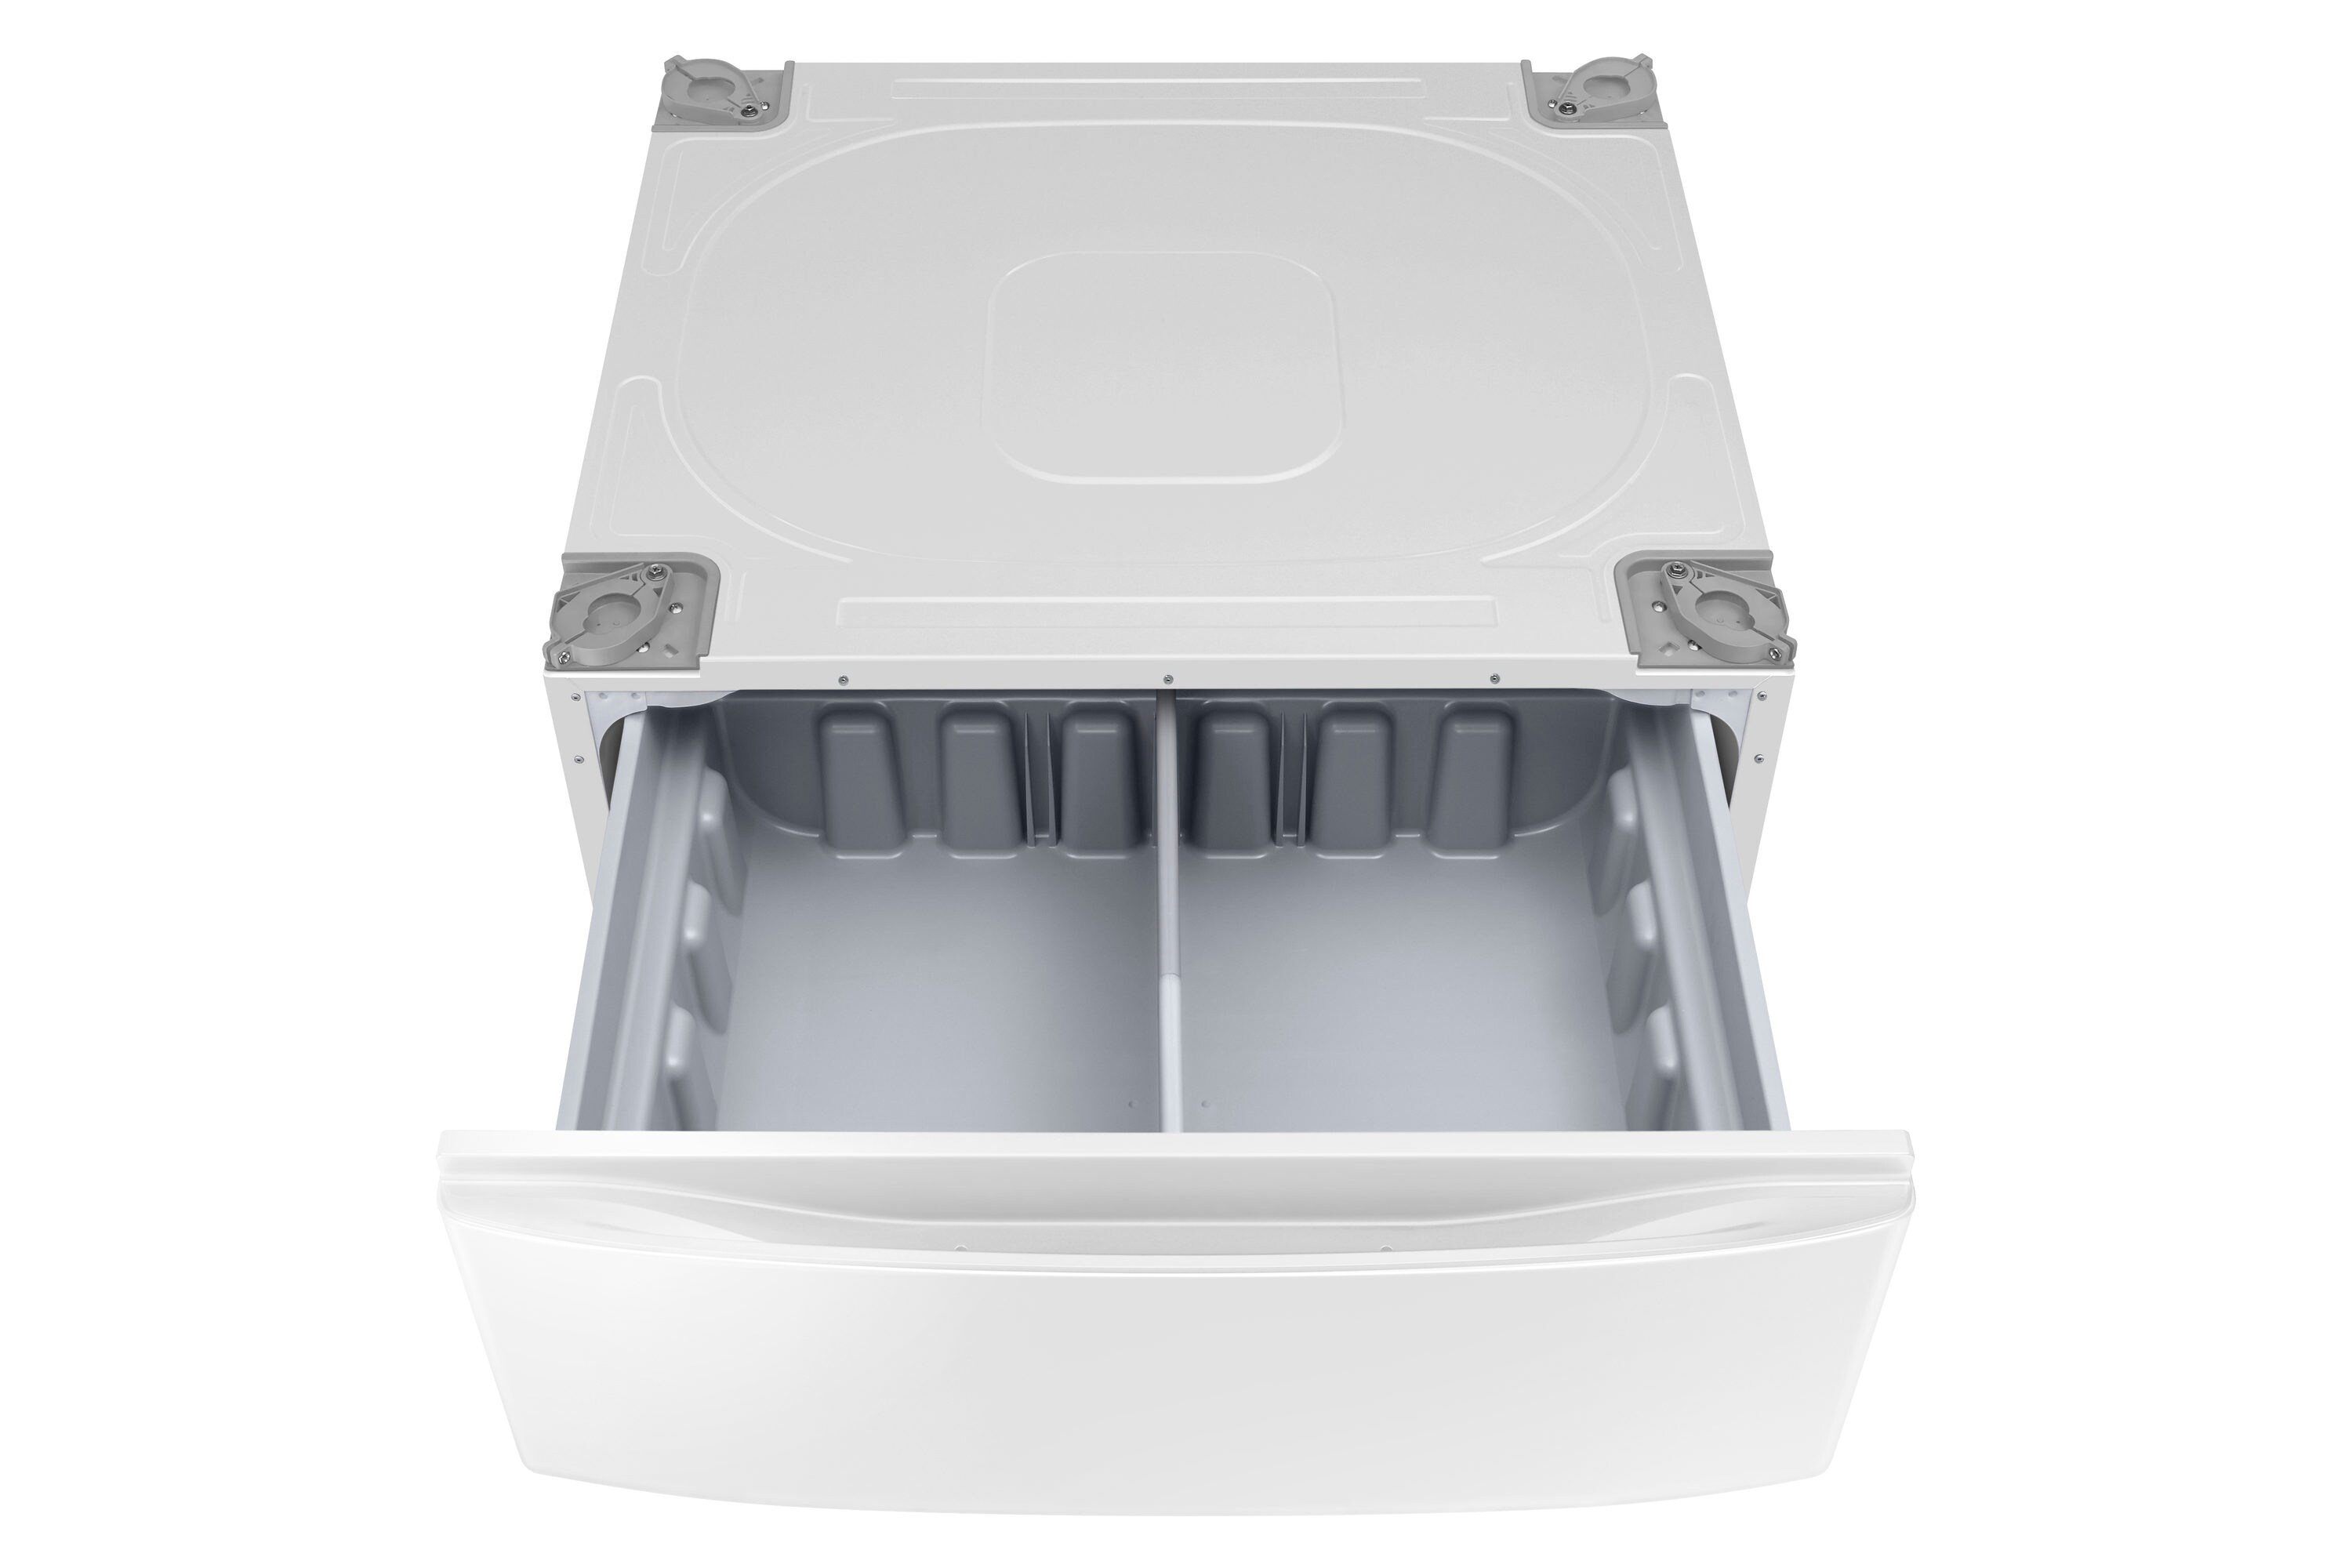 Samsung WF56H9100AW Front Load Washer & DV56H9100EW Electric Dryer w/ Pedestal Drawers